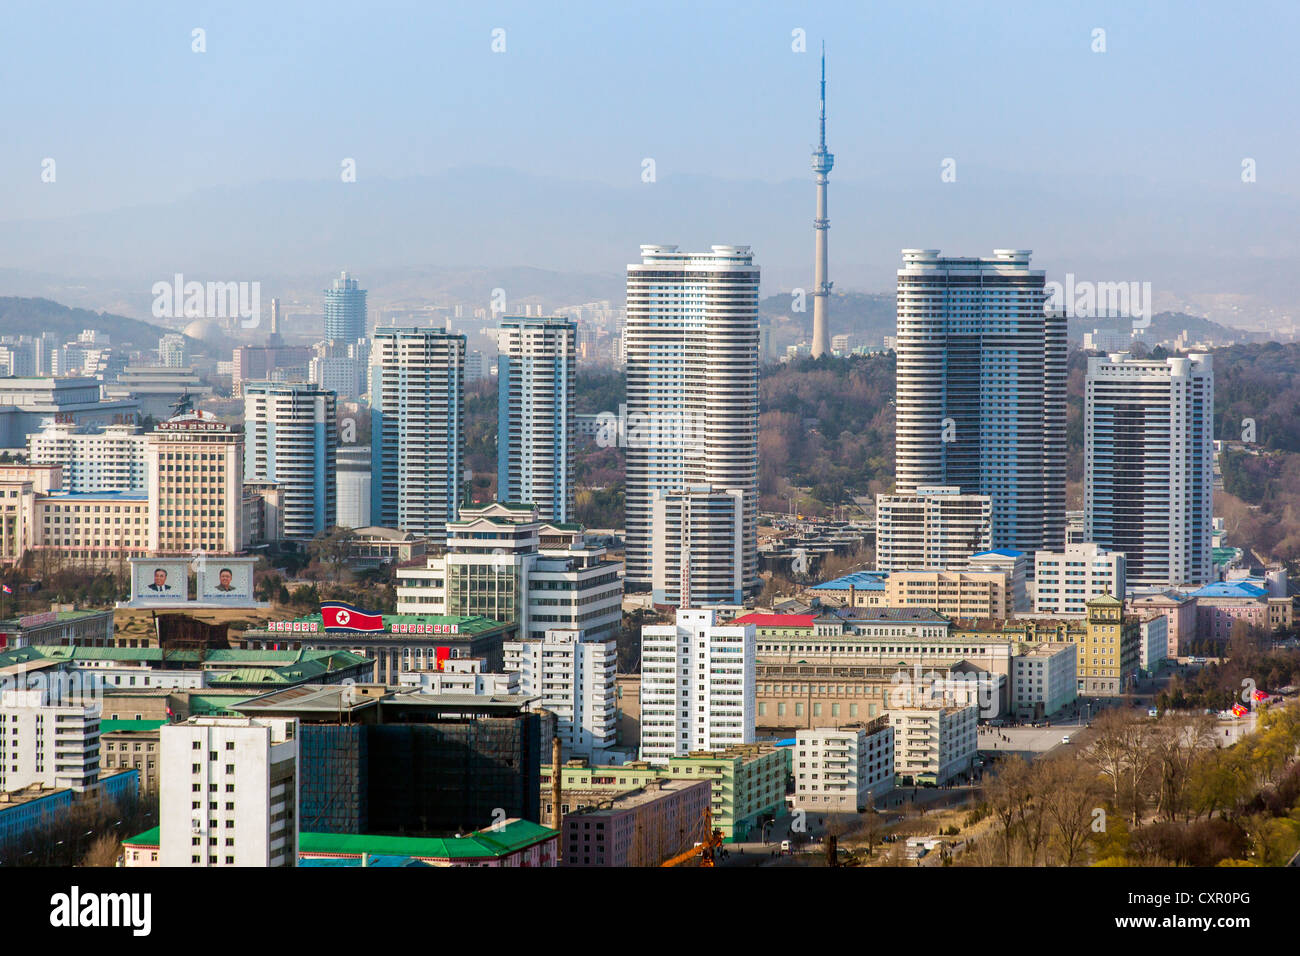 Democratic Peoples's Republic of Korea (DPRK), North Korea, Pyongyang city skyline Stock Photo